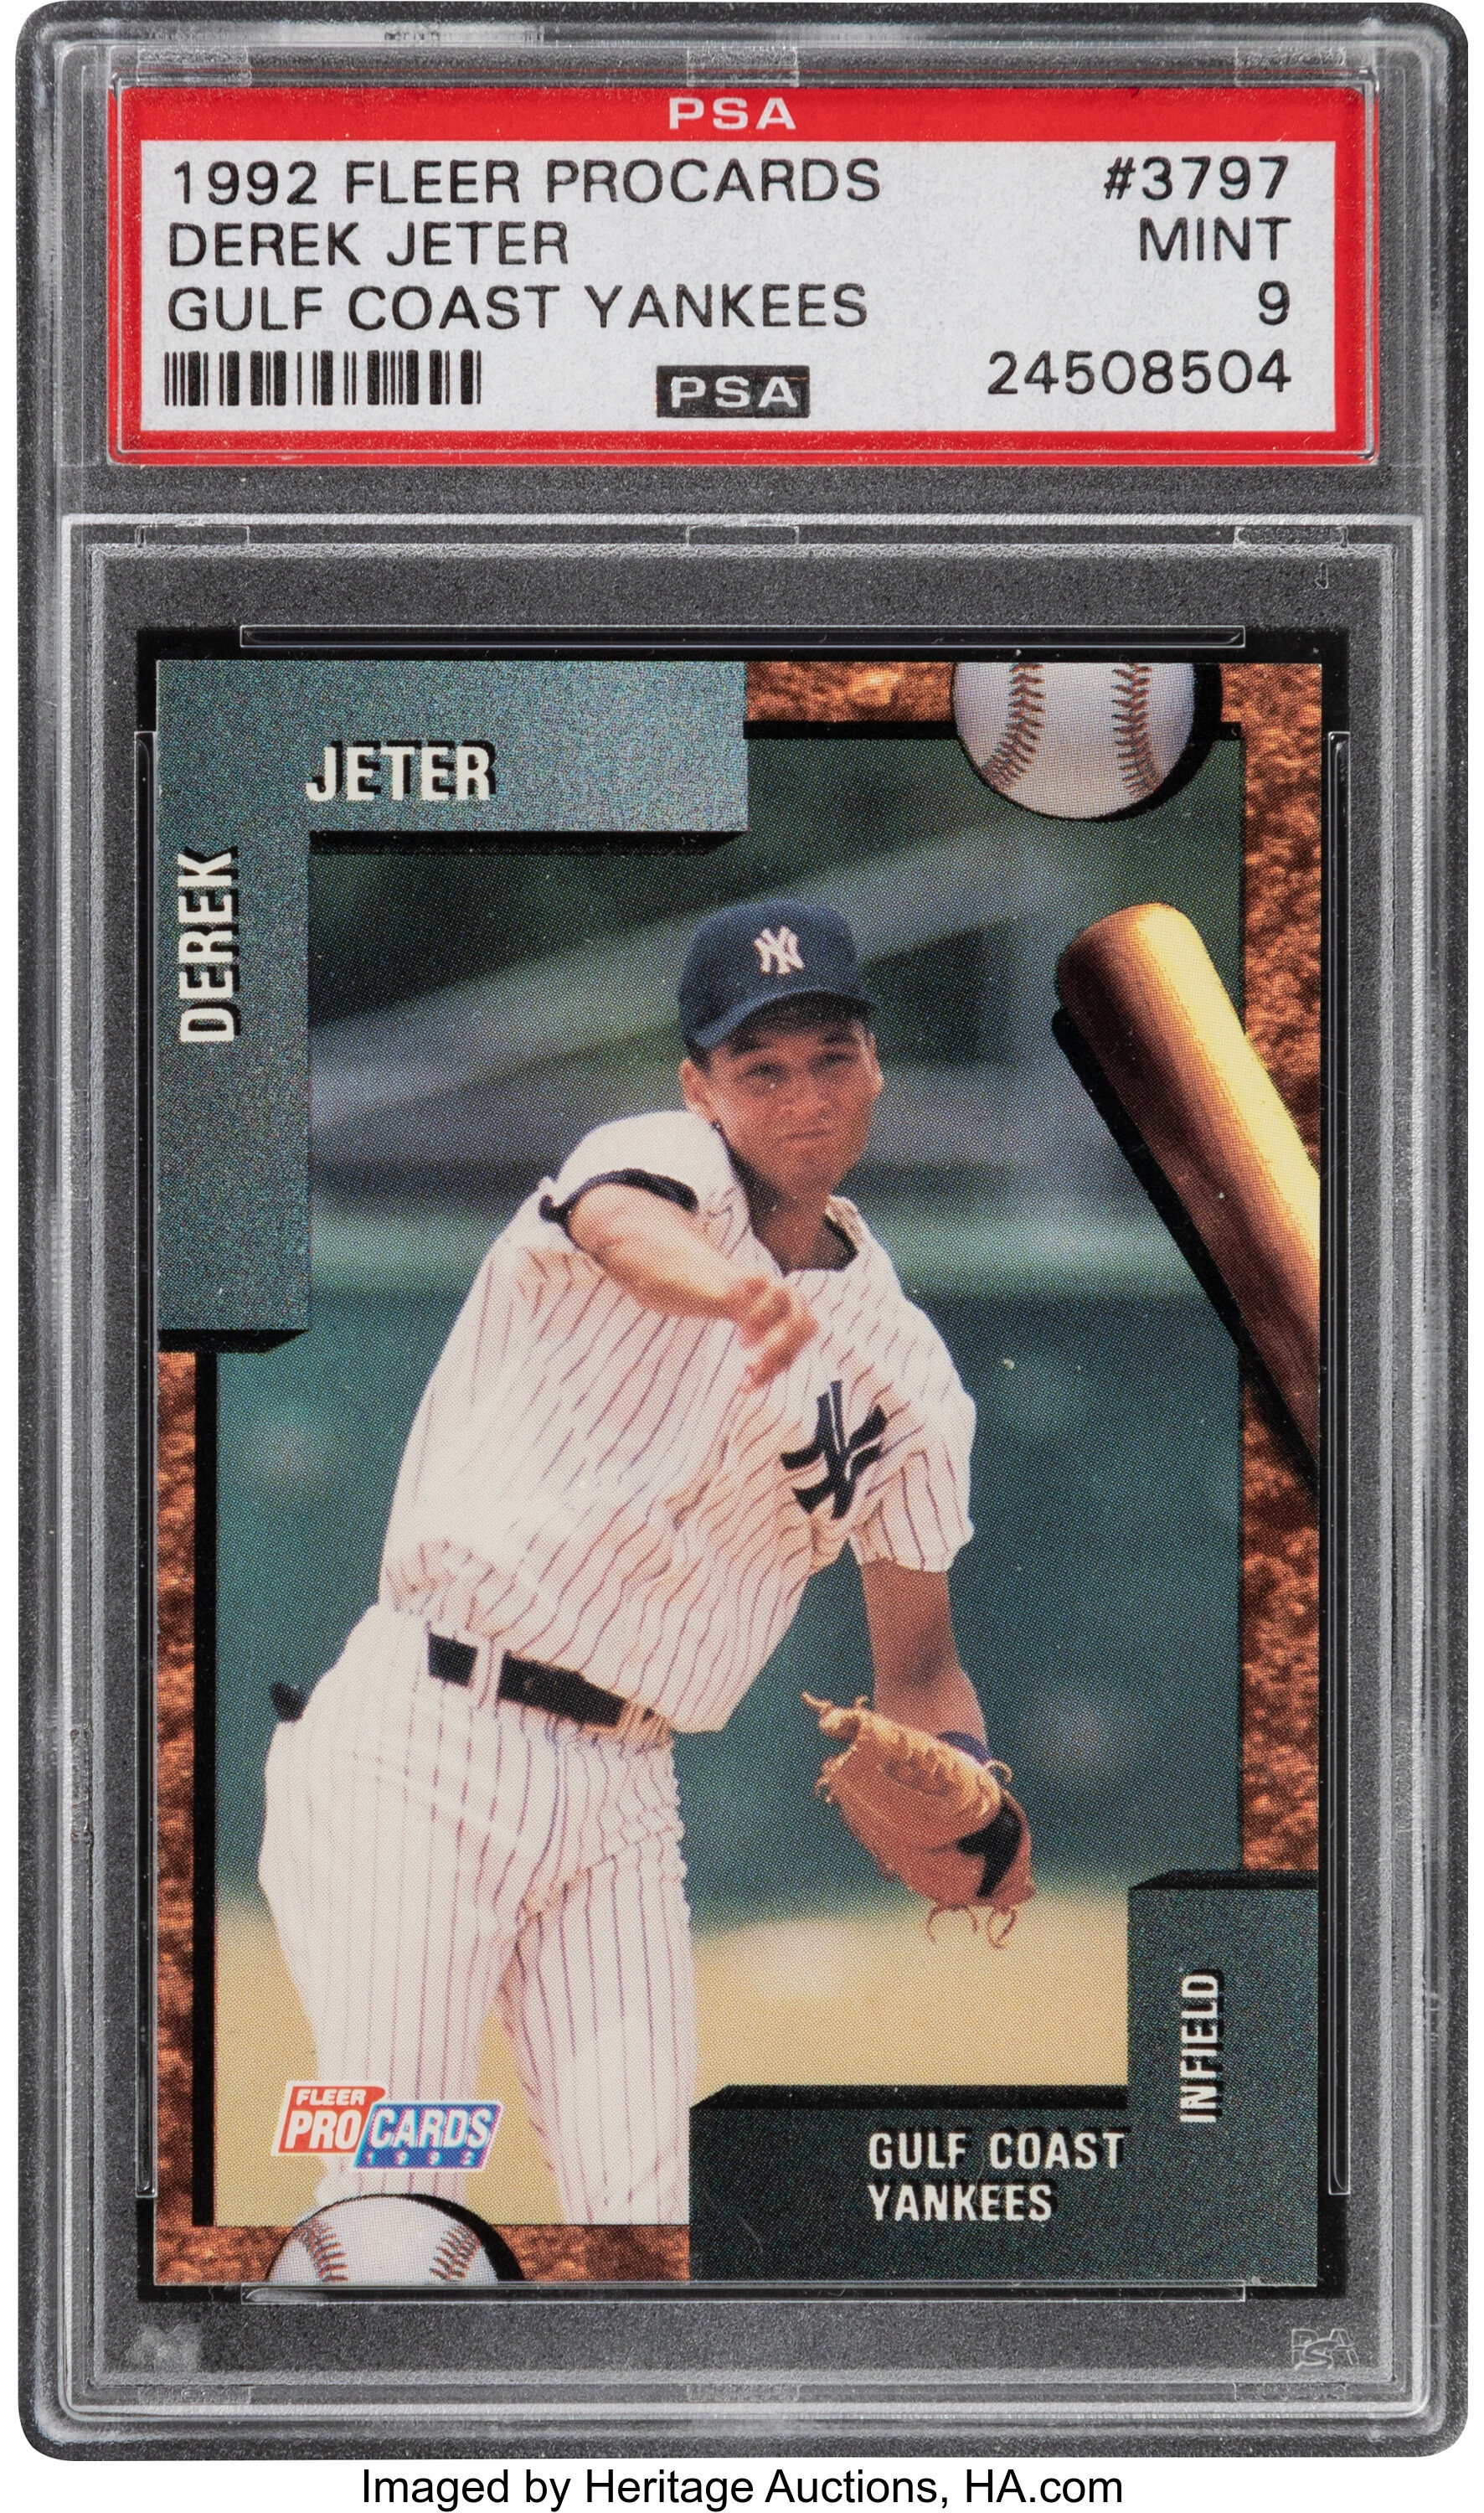 1992 Fleer Procards Gulf Coast Yankees Derek Jeter #3797 PSA Mint